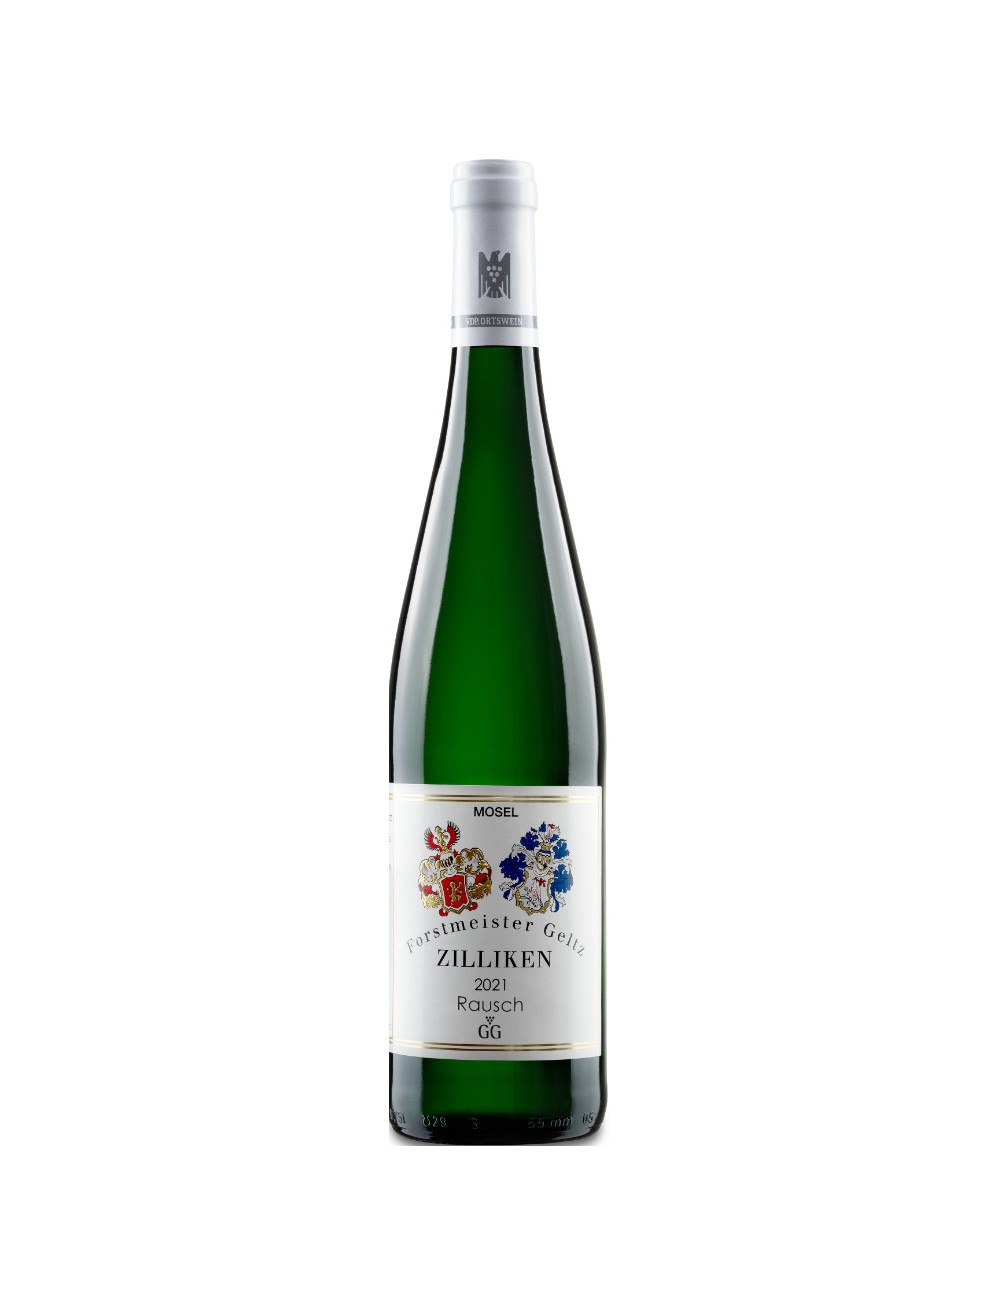 Rausch Grosses Gewächs (Grand Cru) Riesling 2022 dry from Winery  Forstmeister Geltz-Zilliken in Saarburg online. Free shipping,